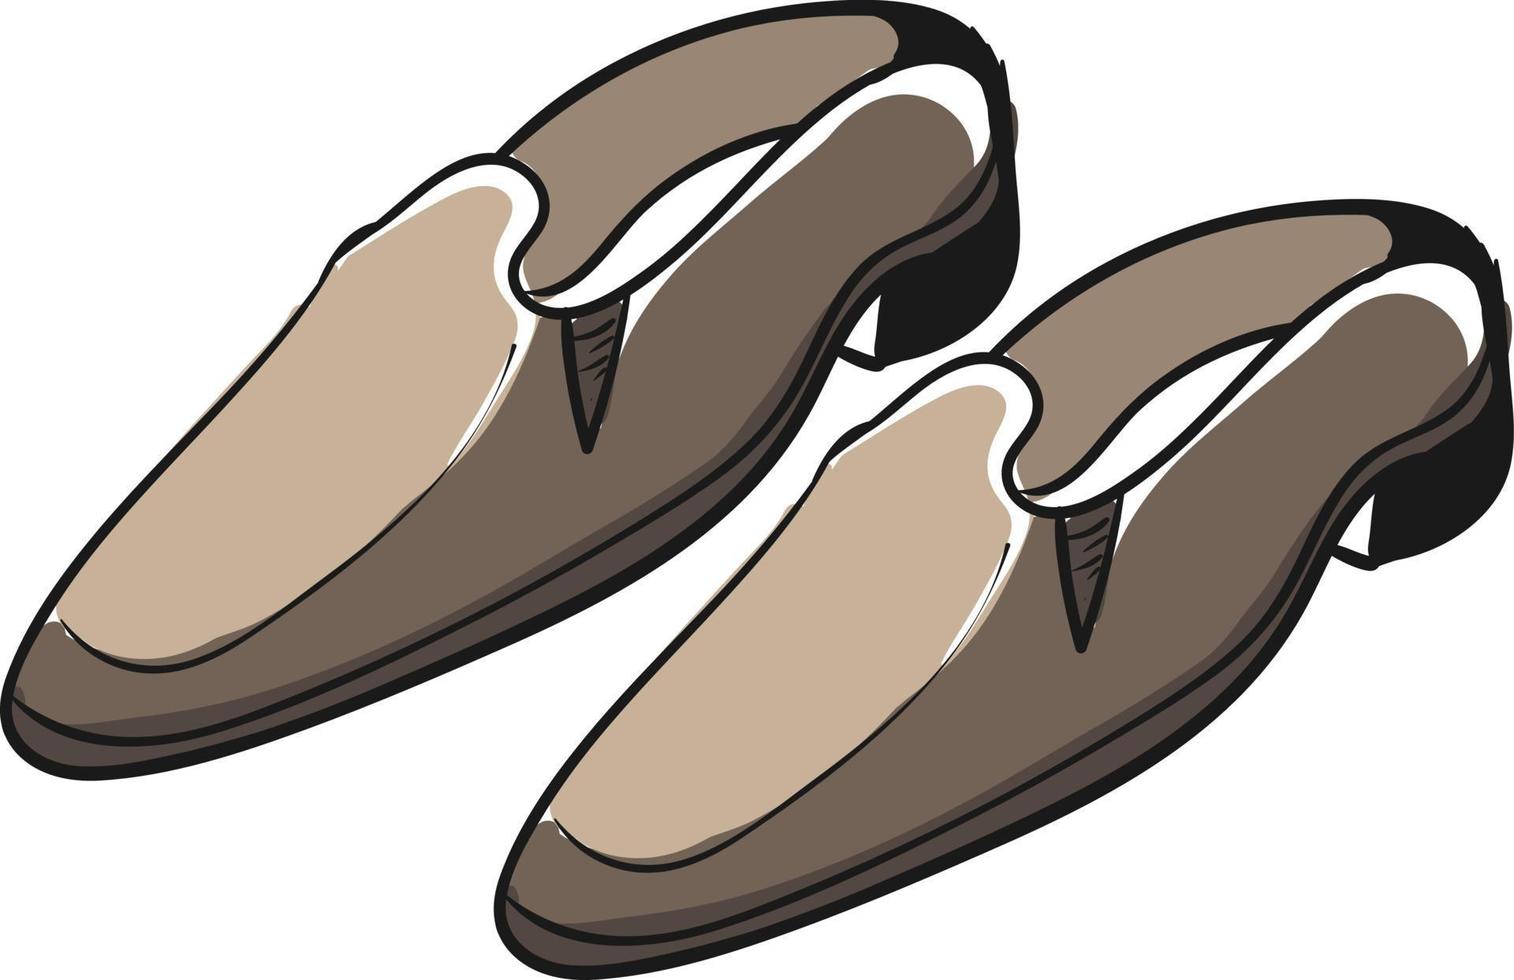 Brown men shoes, illustration, vector on white background